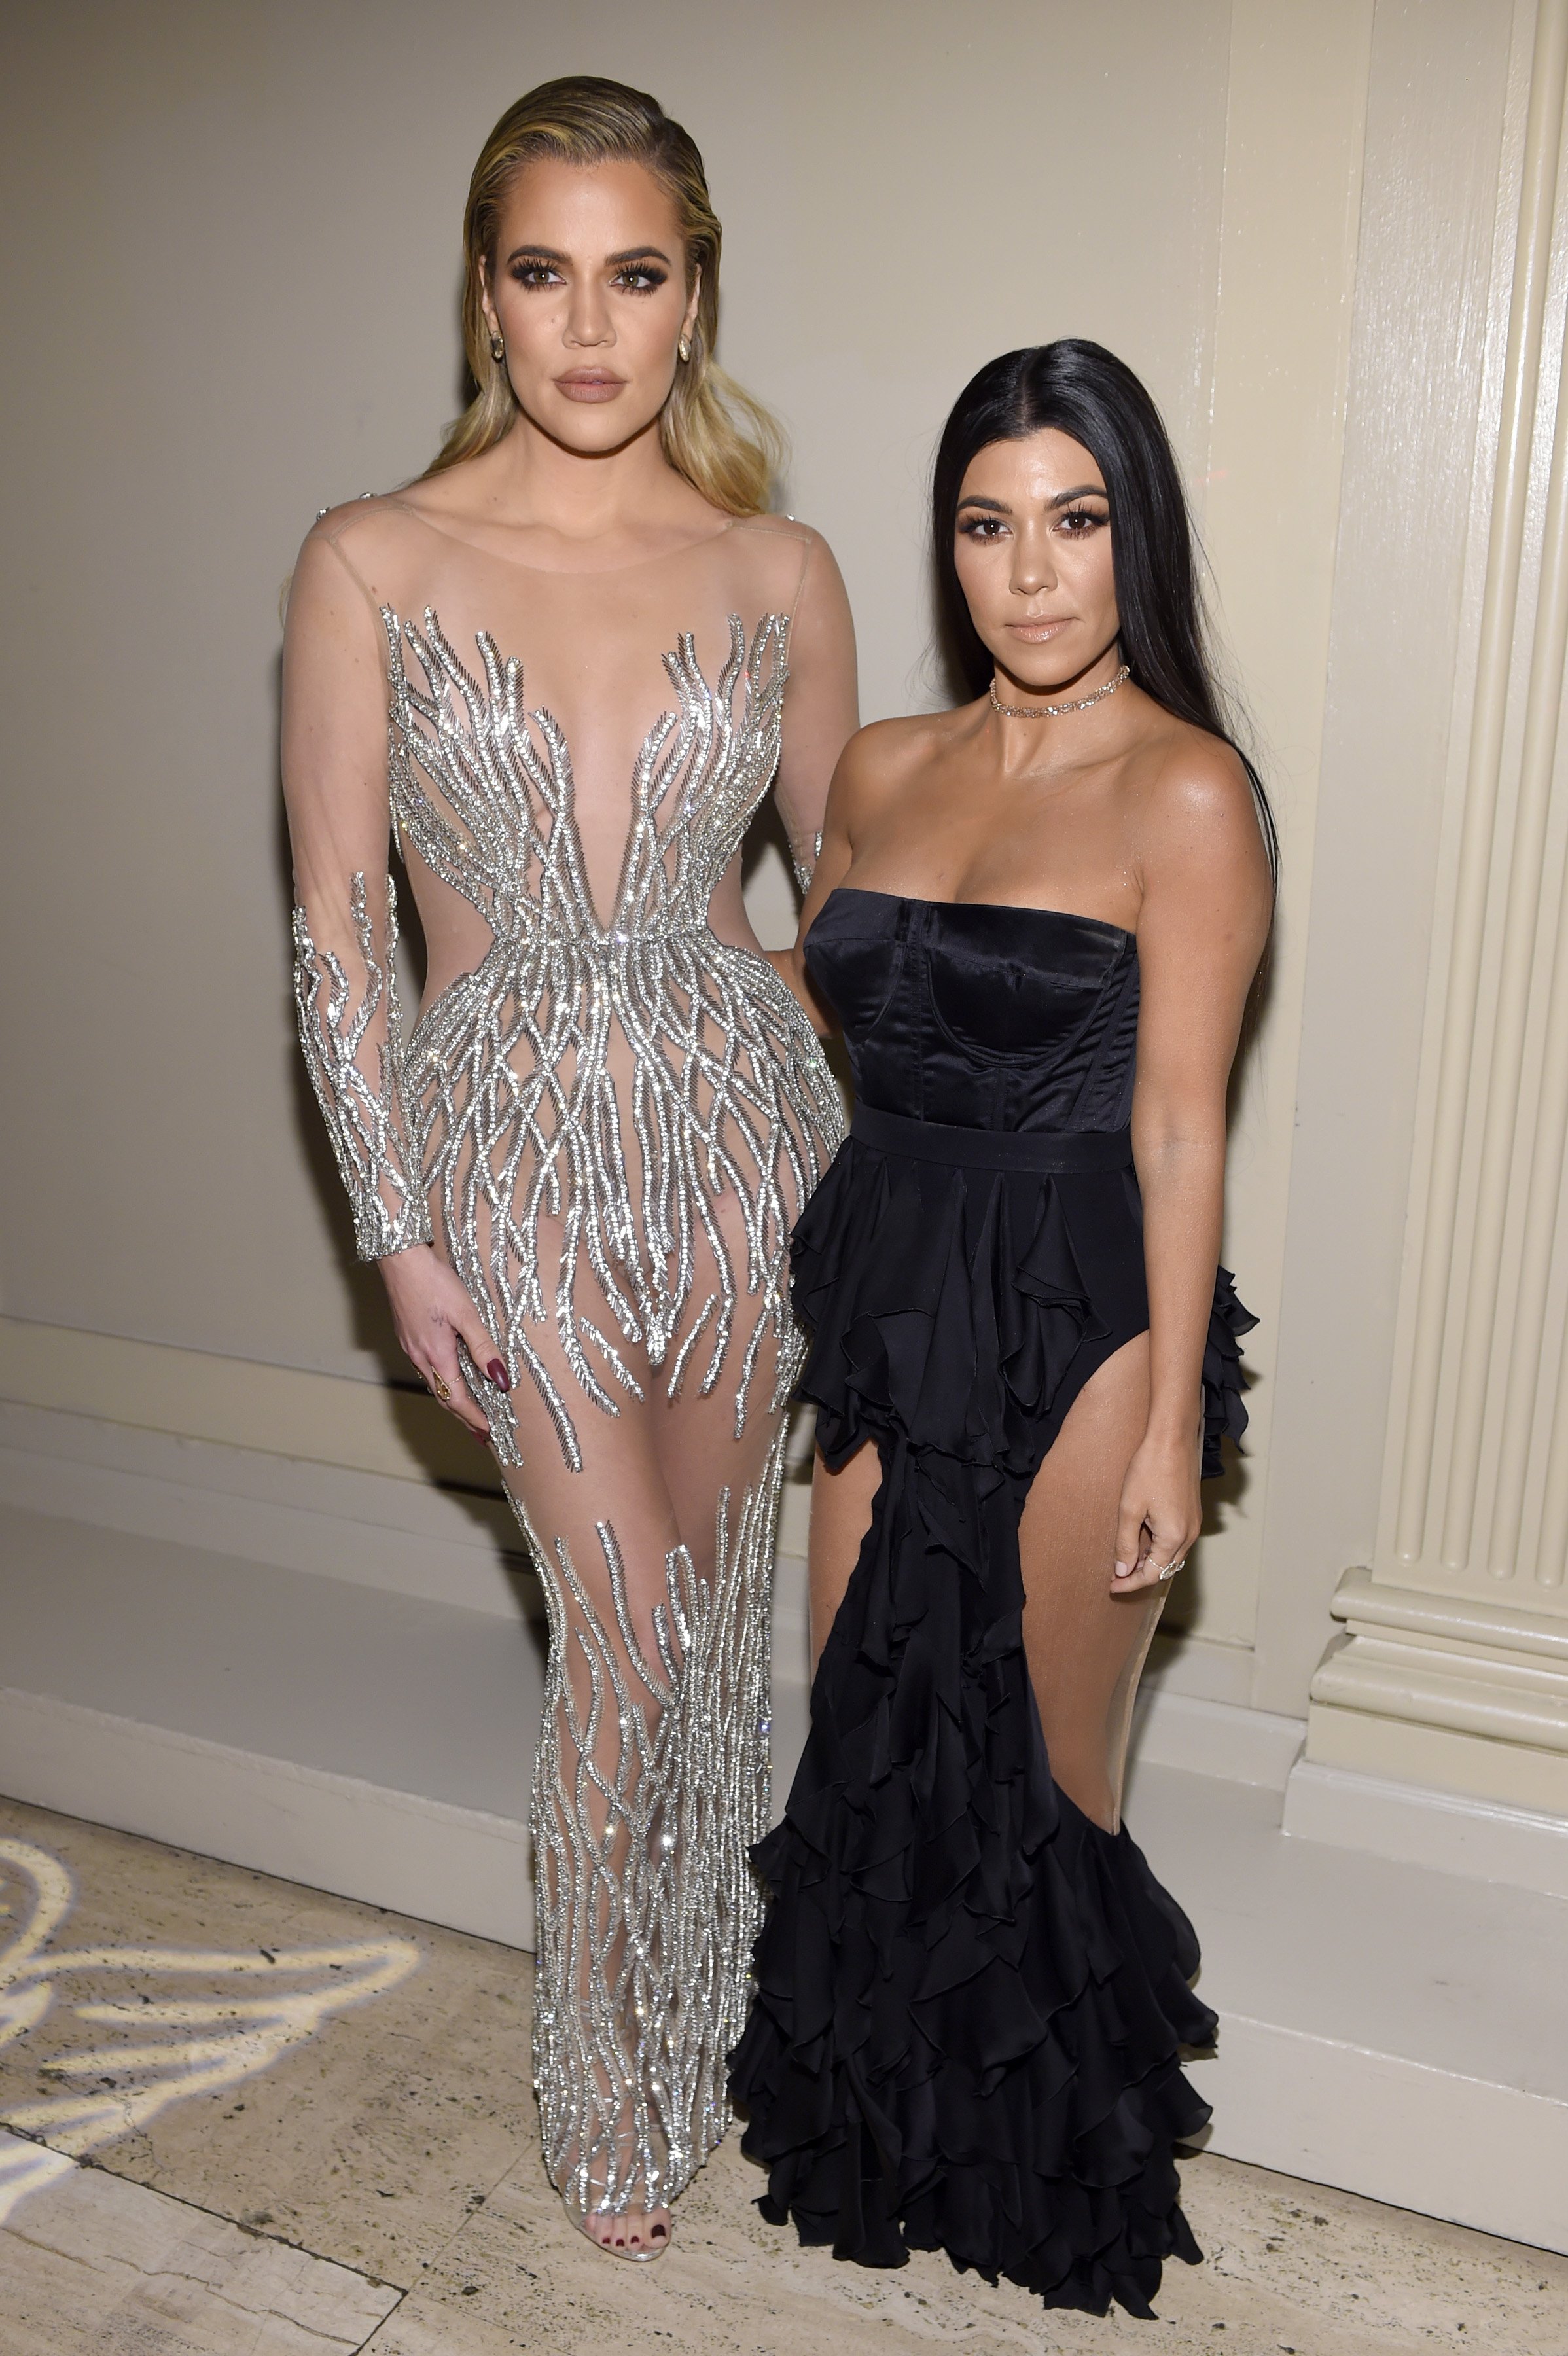 Khloe Kardashian and Kourtney Kardashian attend the 2016 Angel Ball on November 21, 2016 in New York City | Photo: GettyImages